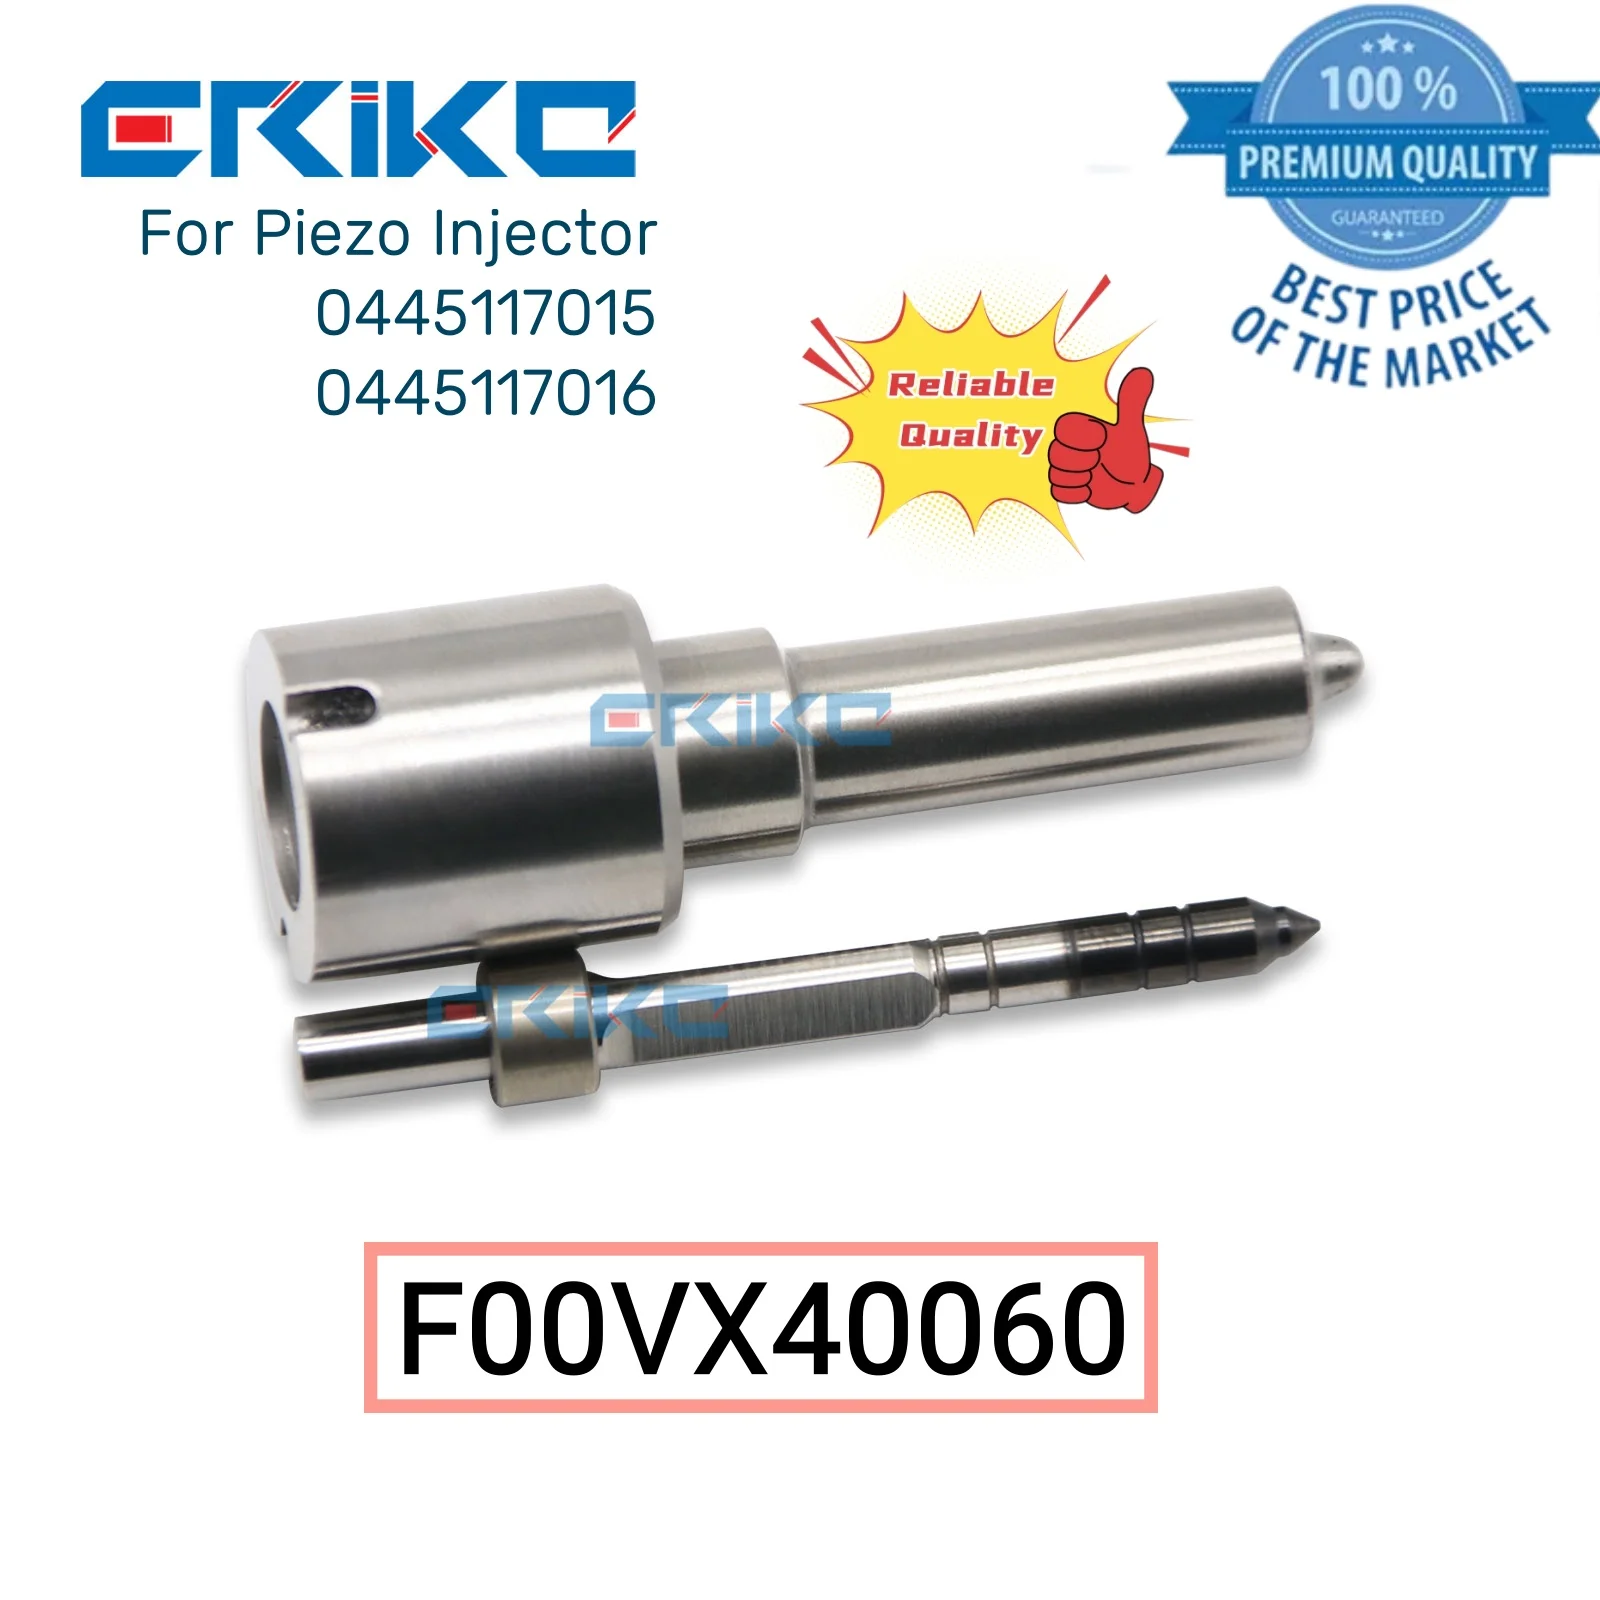 

F00VX40060 Nozzle Injector F 00V X40 060 Nozzle Diesel Injection Fuel Injection Nozzle for Piezo Injector 0445117015 0445117016